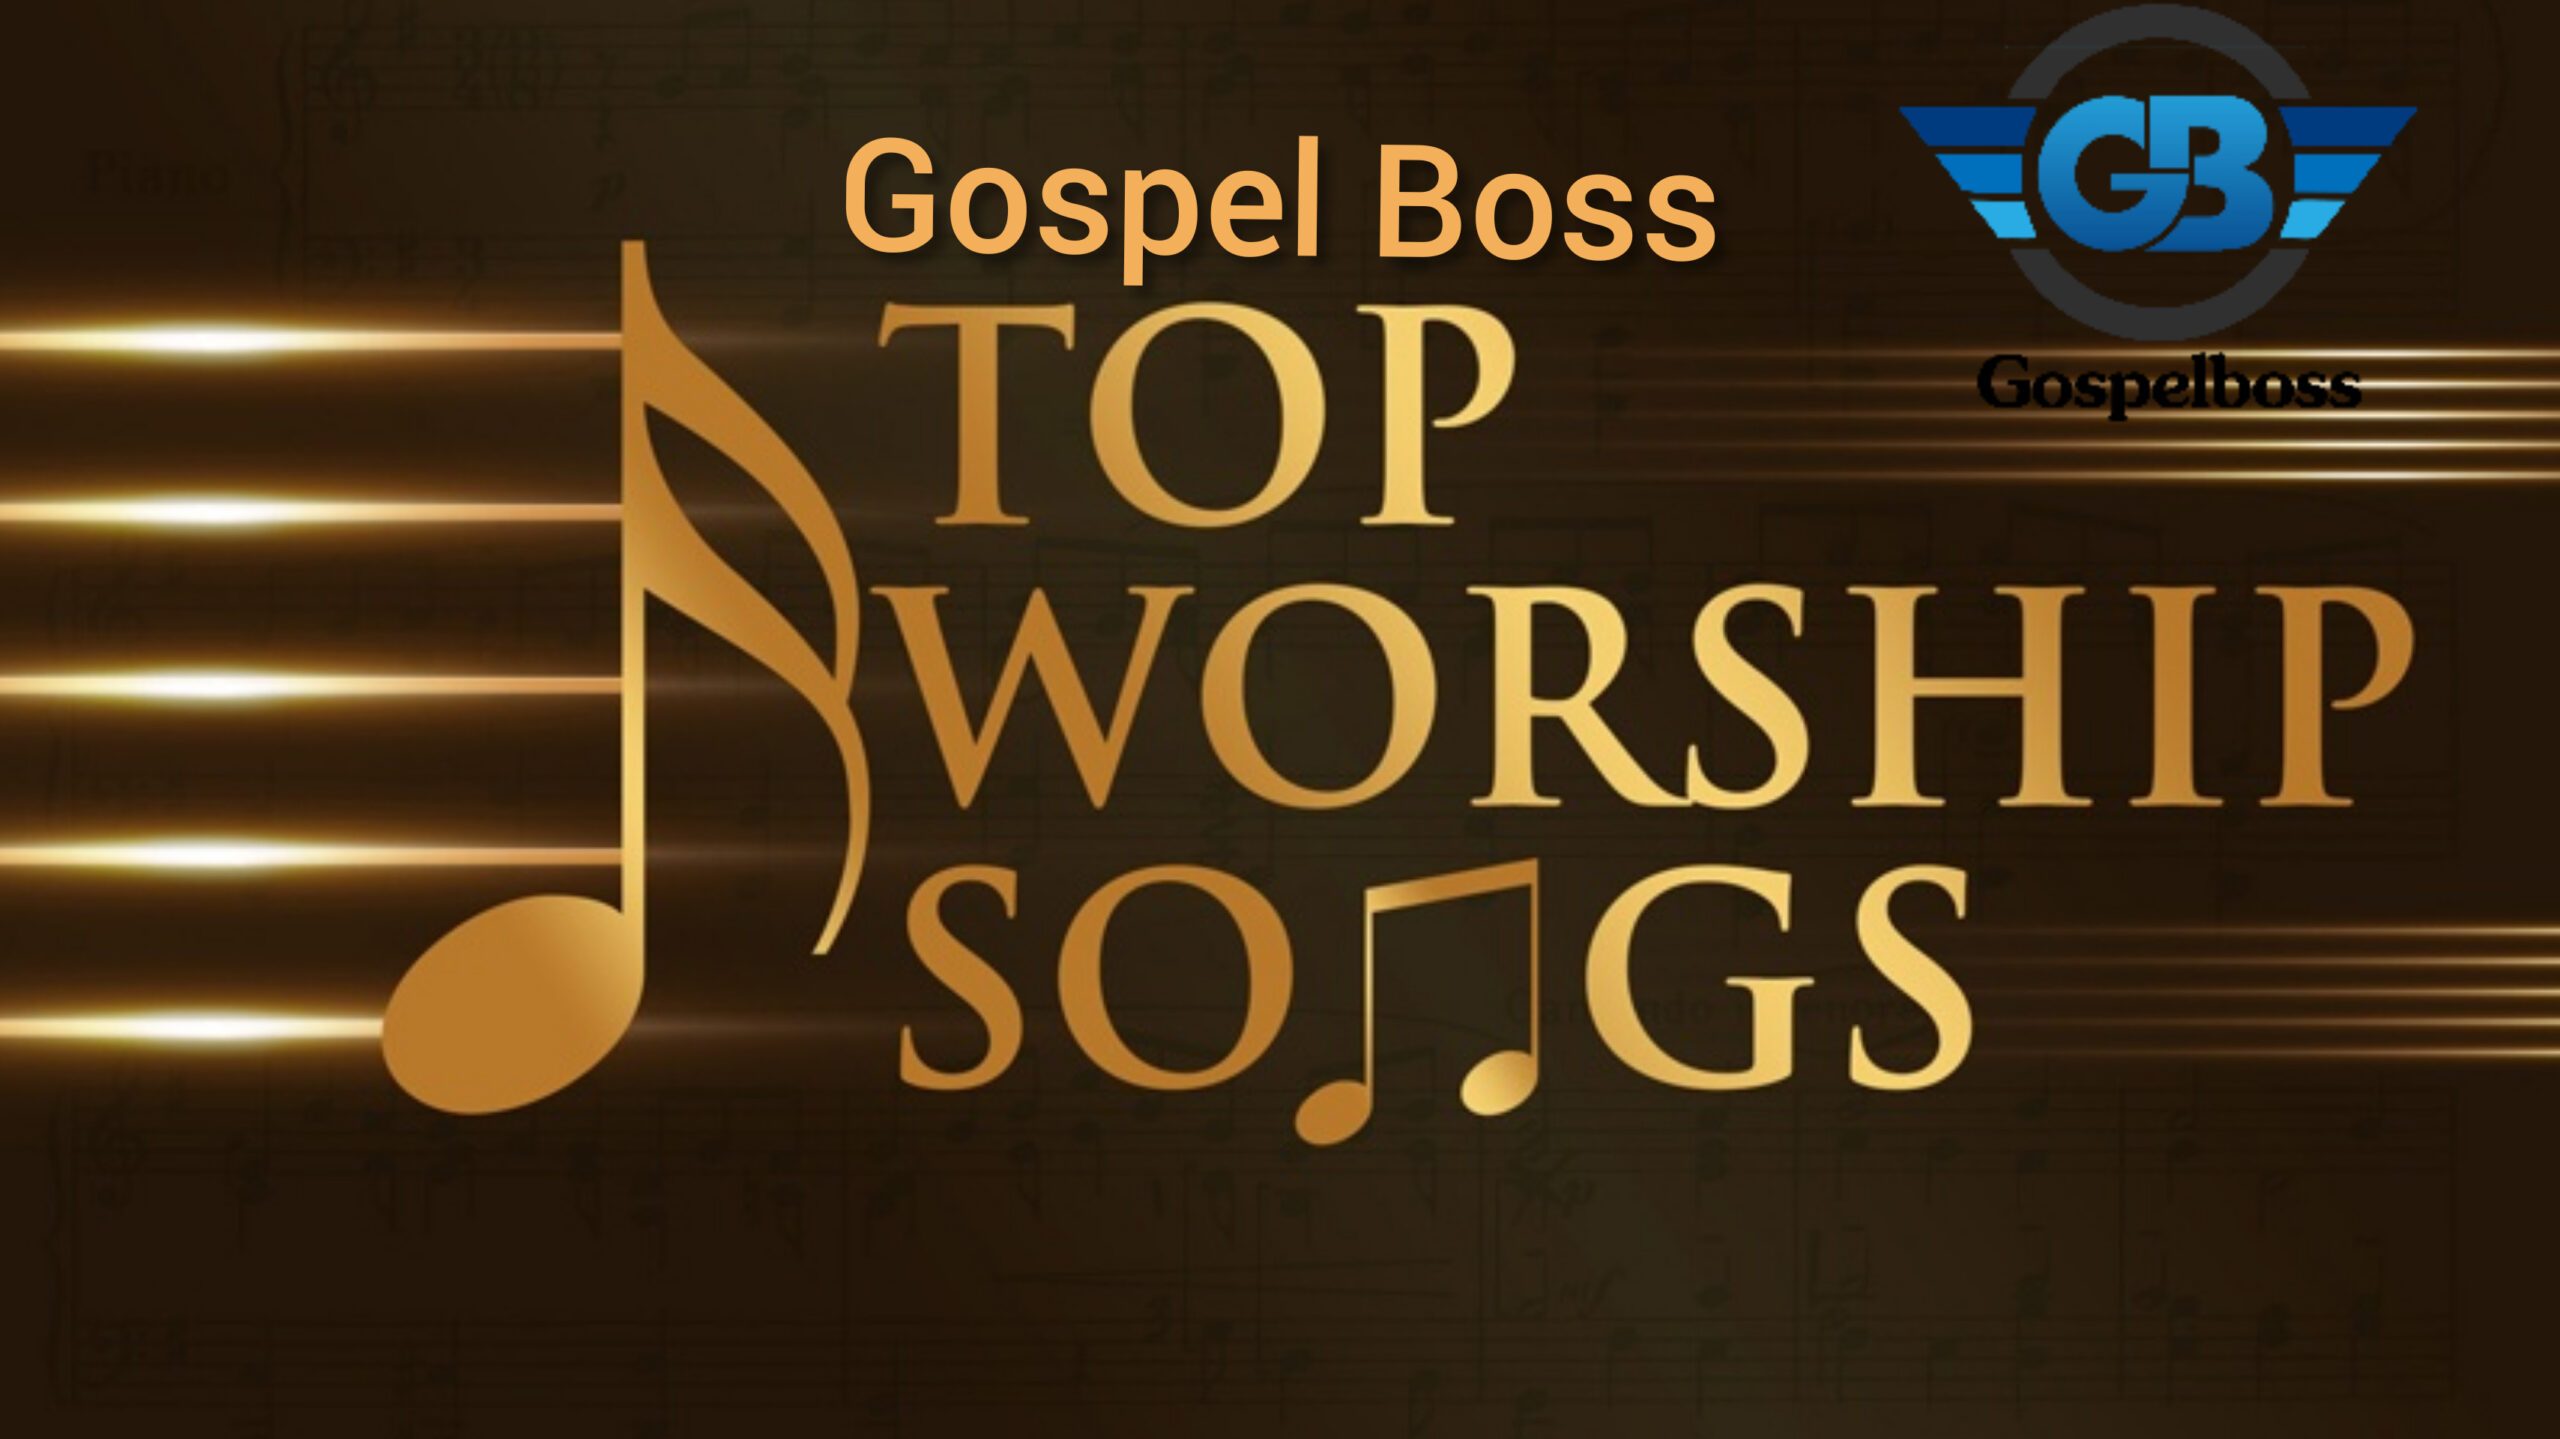 gospel music free download